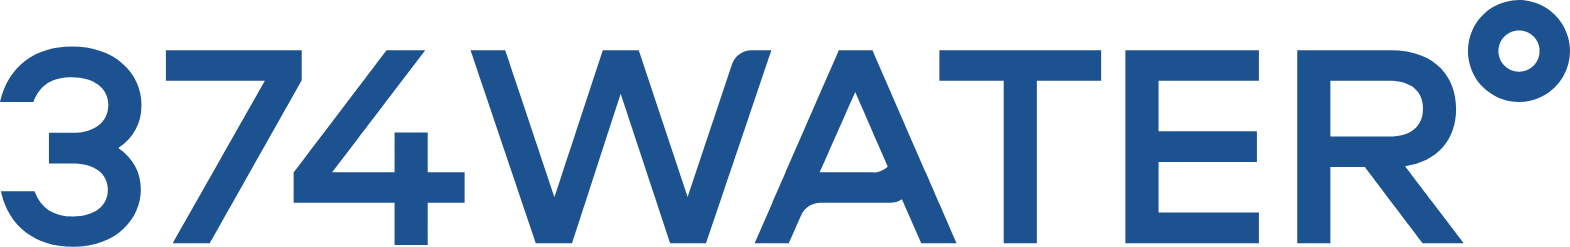 374Water logo large (transparent PNG)